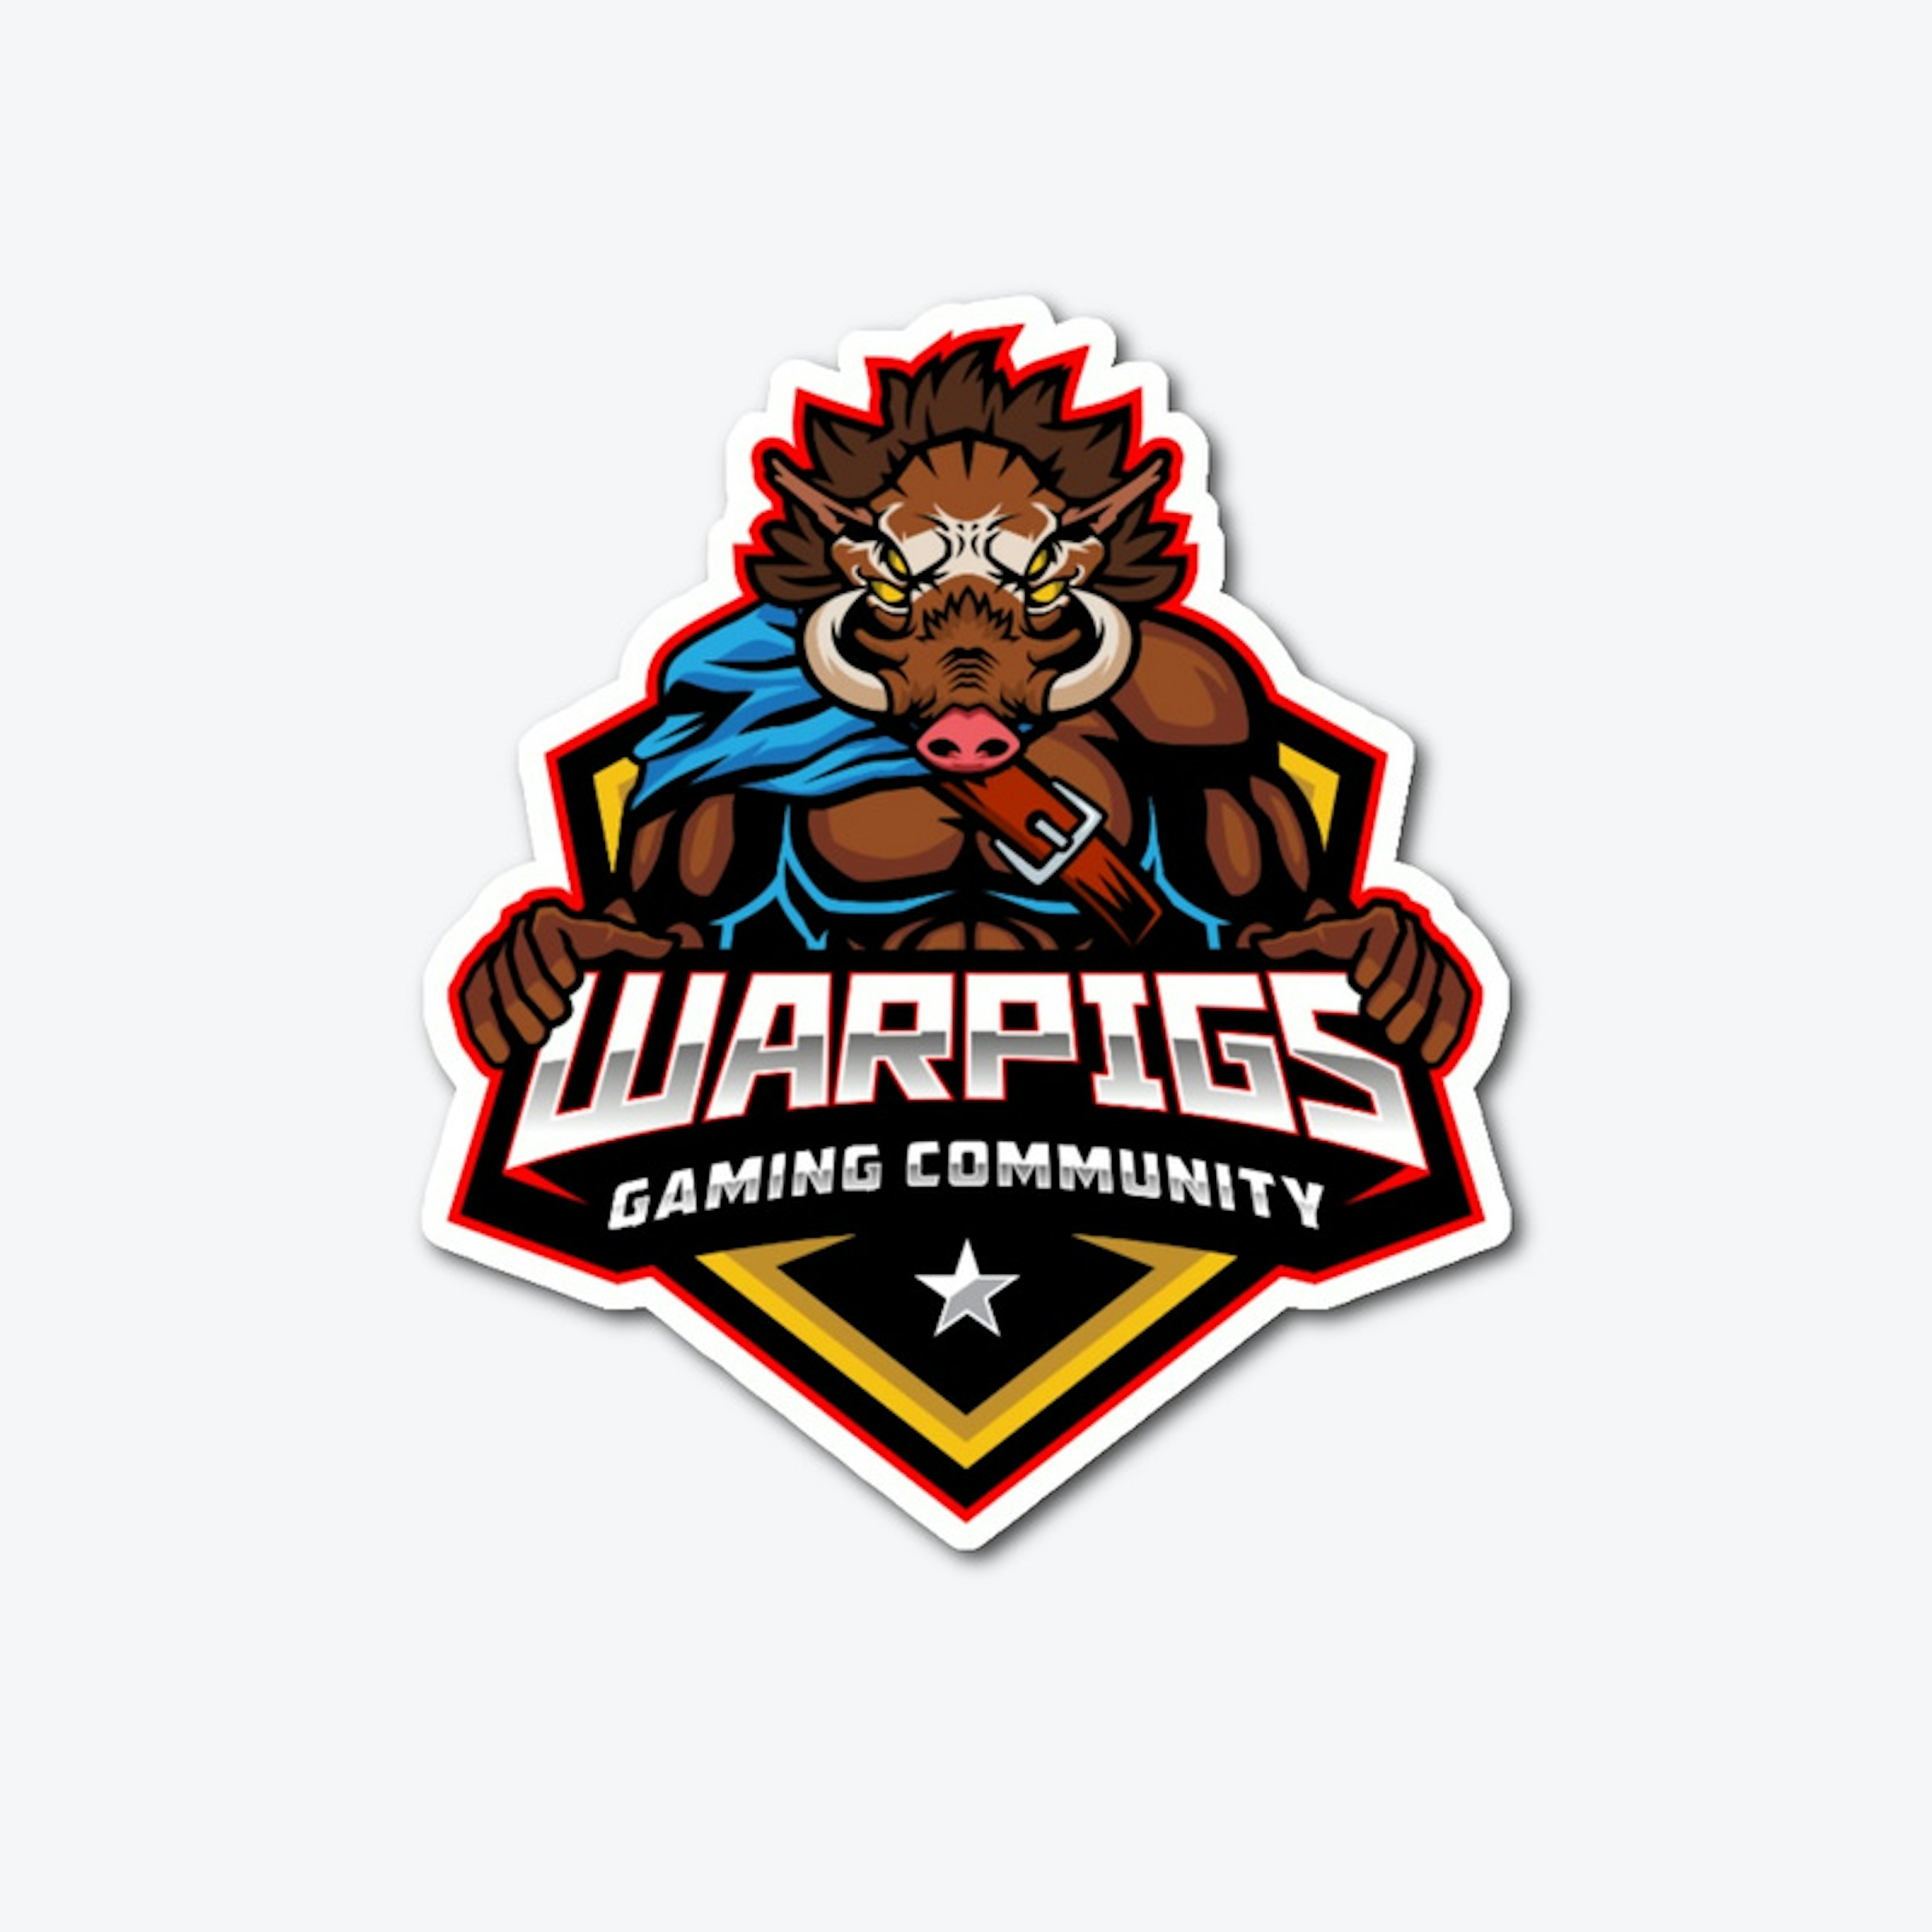 Warpigs Community